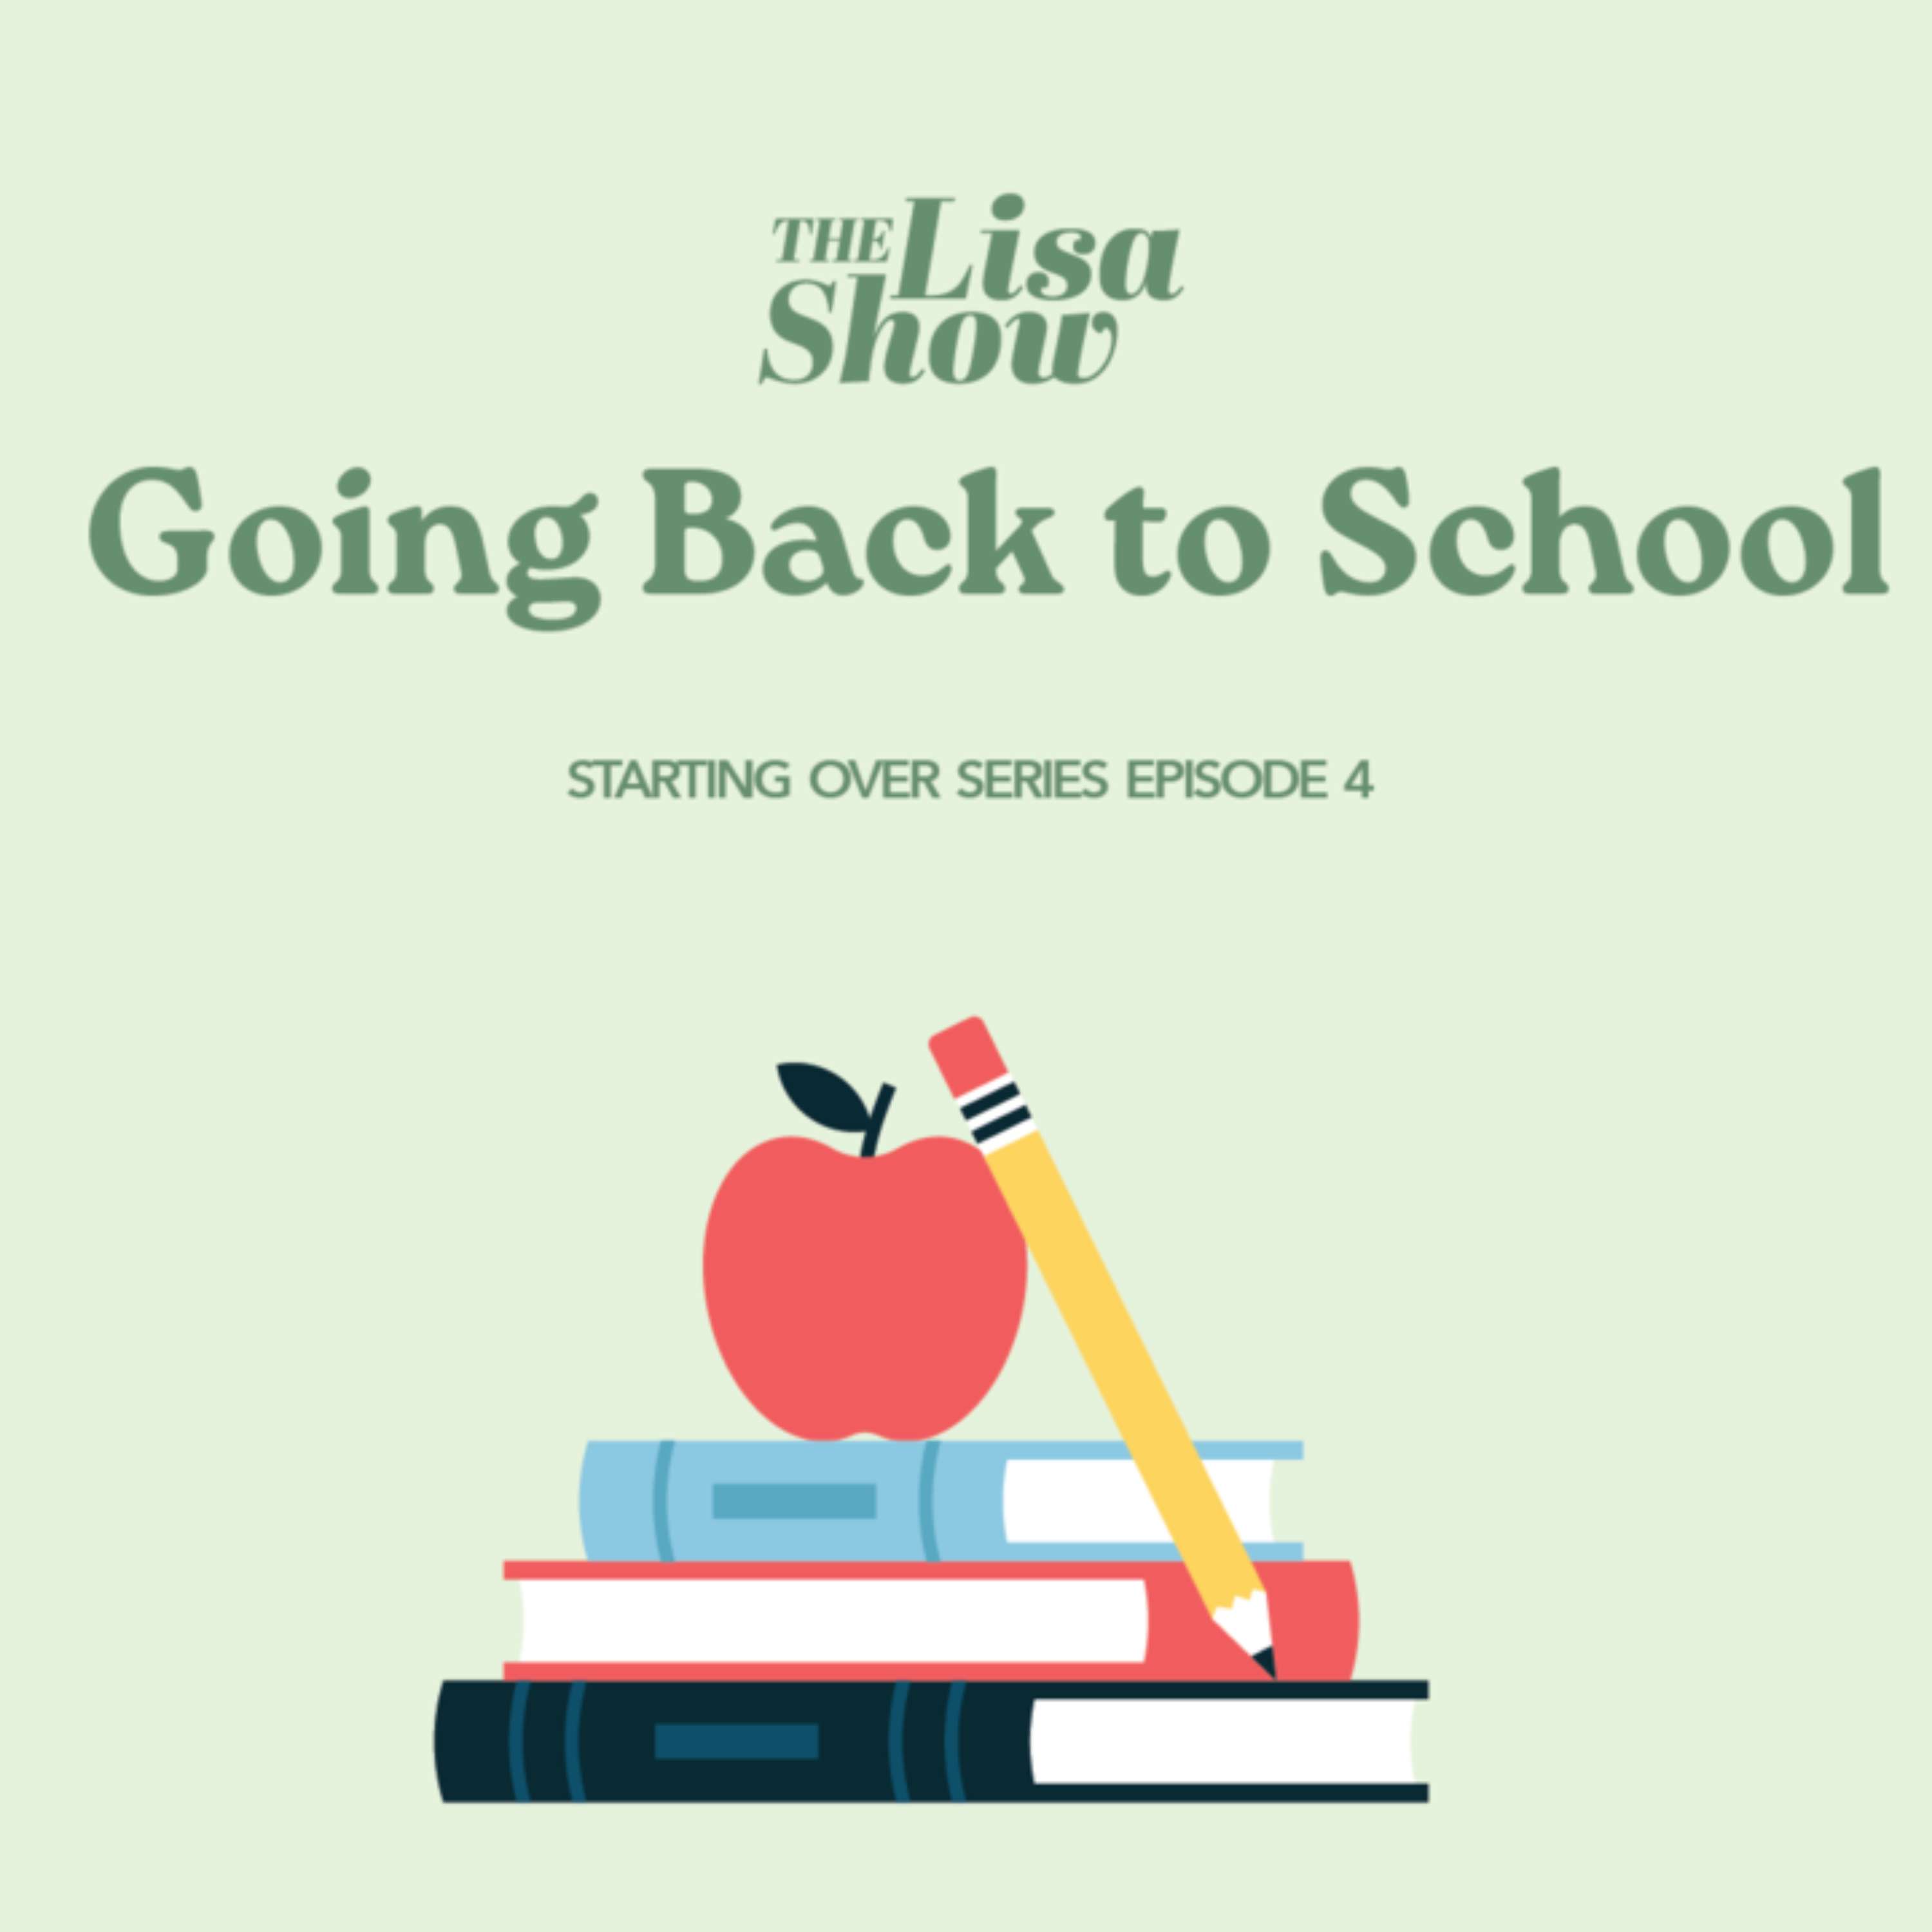 Starting Over E4: Going Back to School